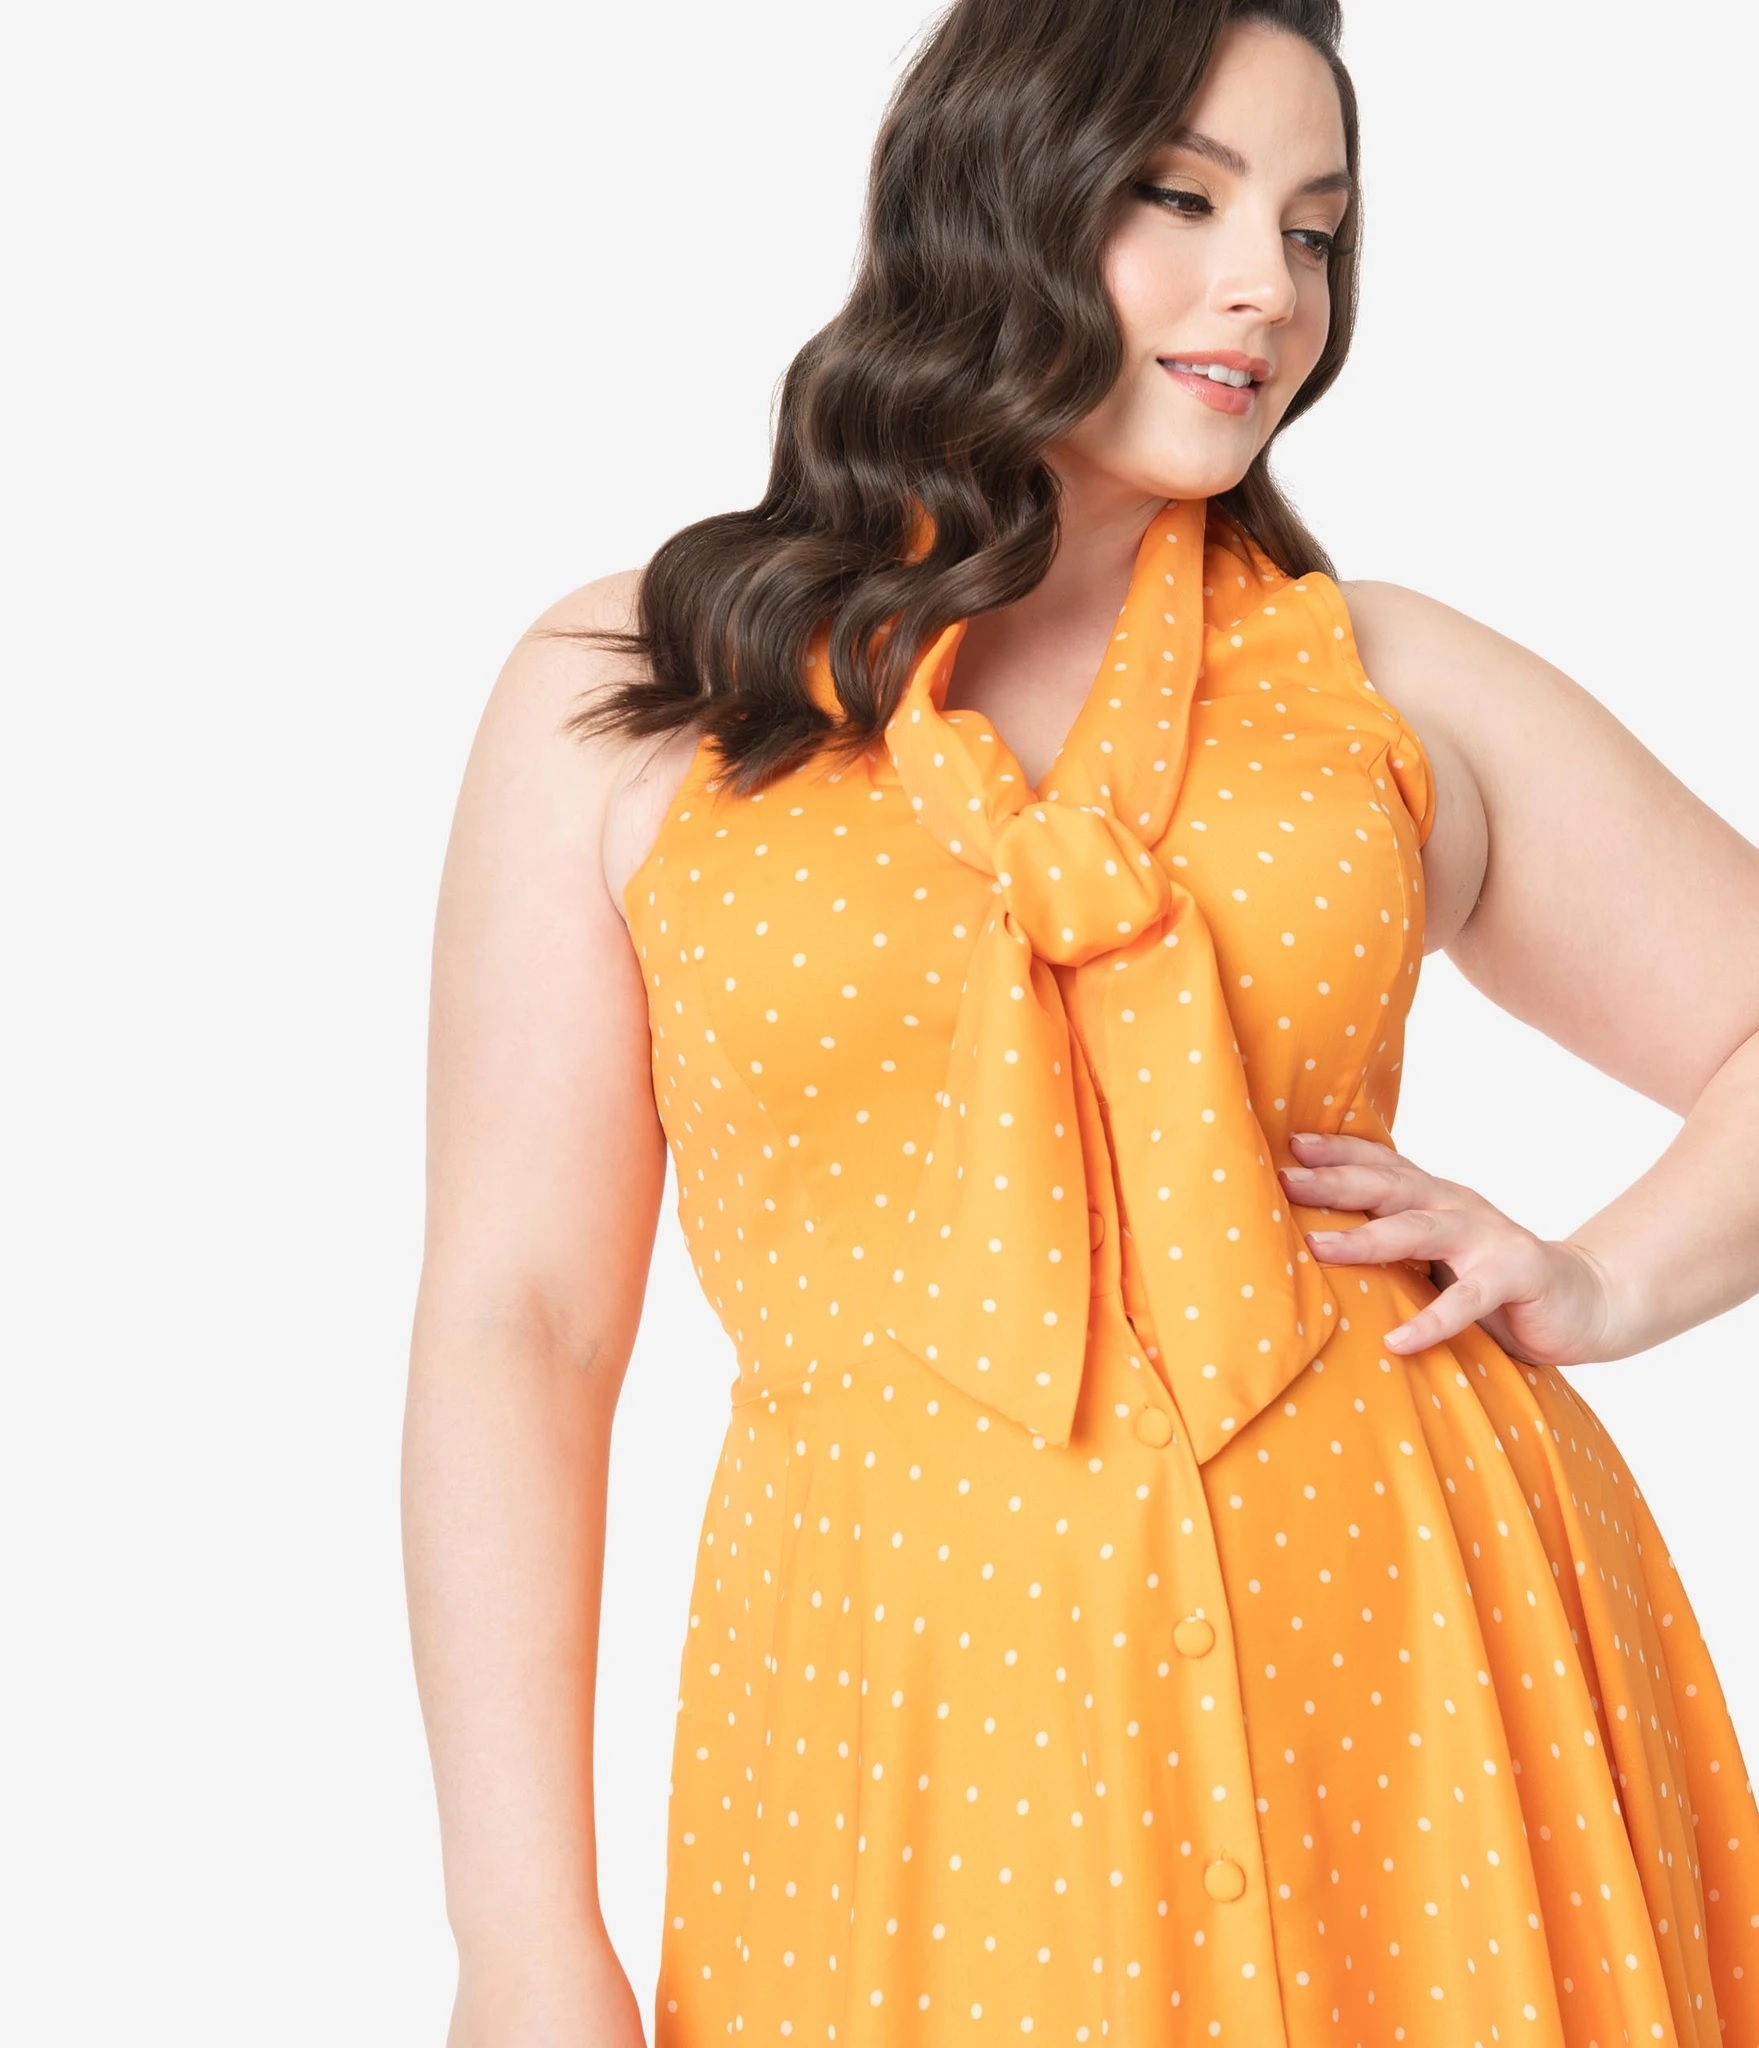 evne teknisk Potentiel 50´er kjole - Trinity: Orange/gul kjole med polka prikker